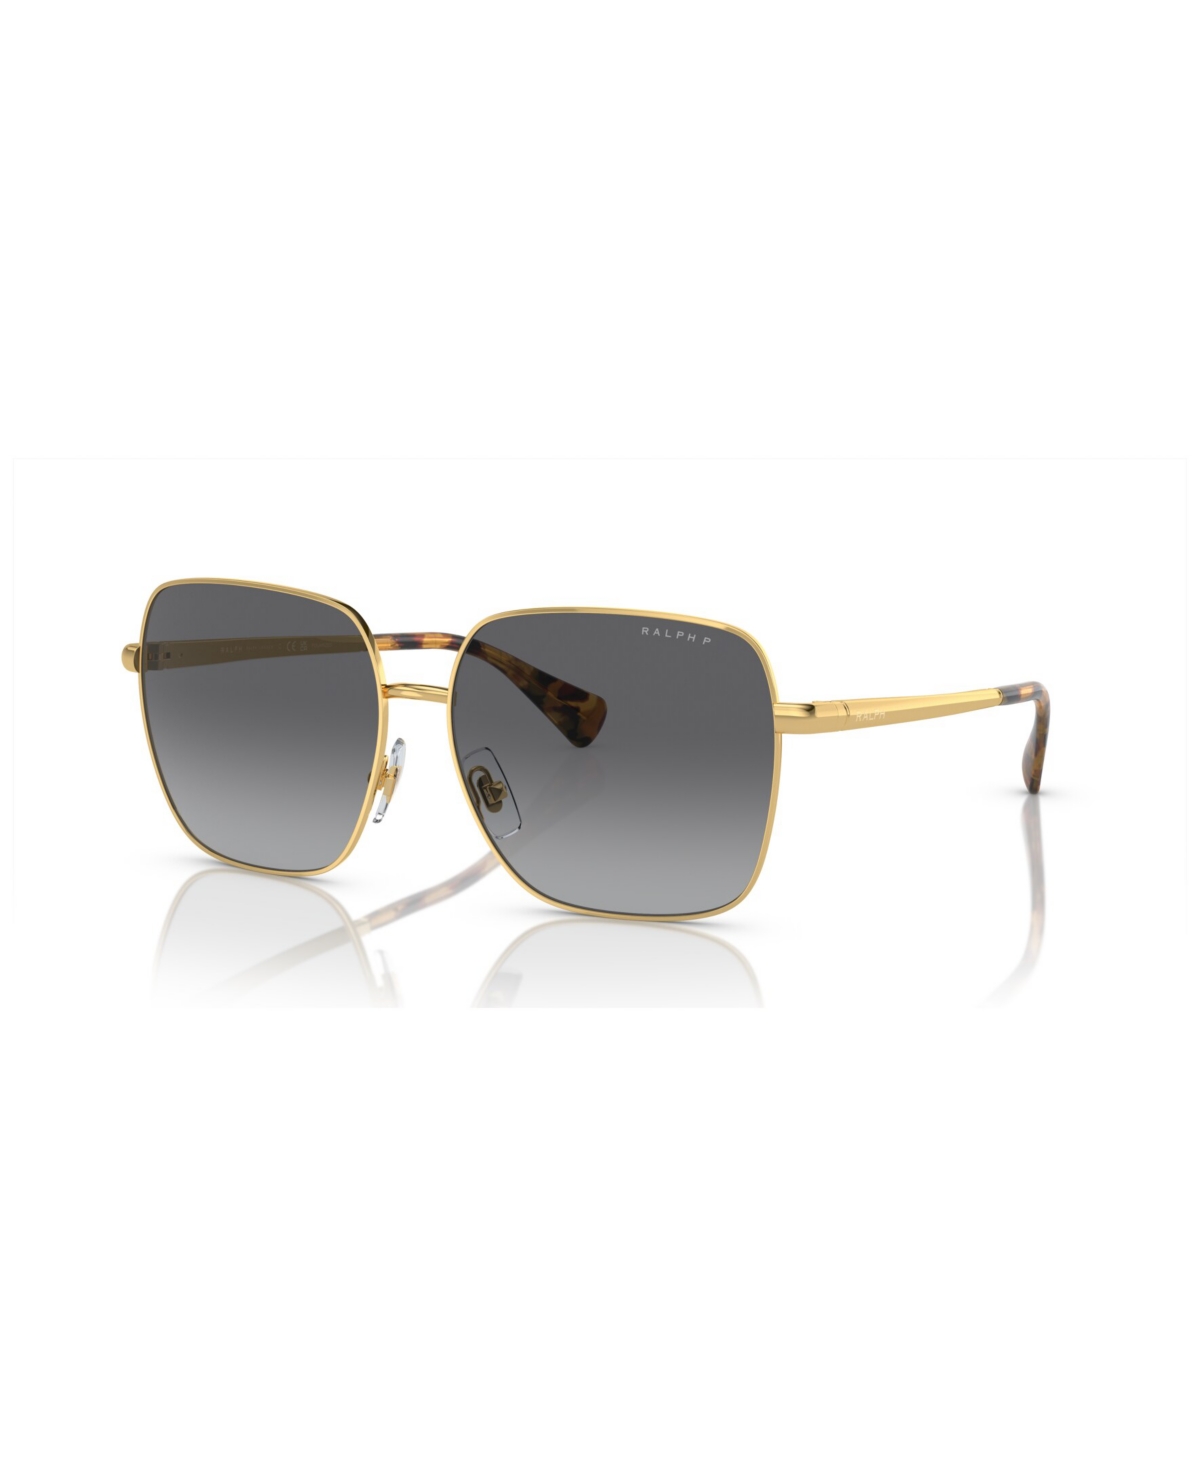 Women's Polarized Sunglasses, Gradient Polar RA4142 - Shiny Gold